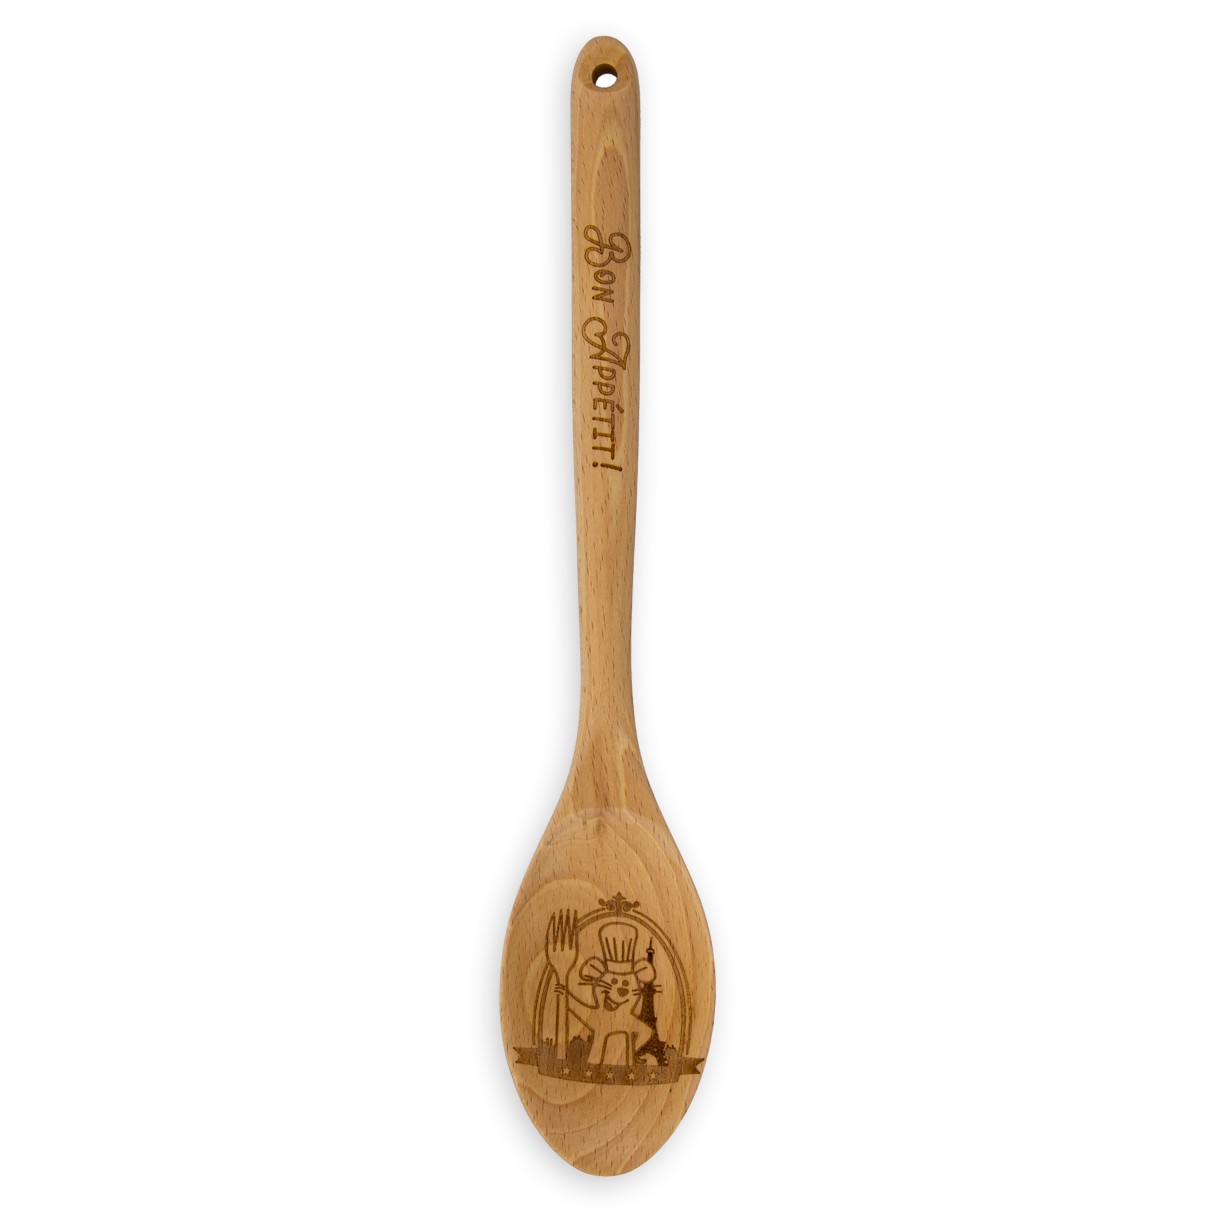 Remy's Ratatouille Adventure Wooden Spoon